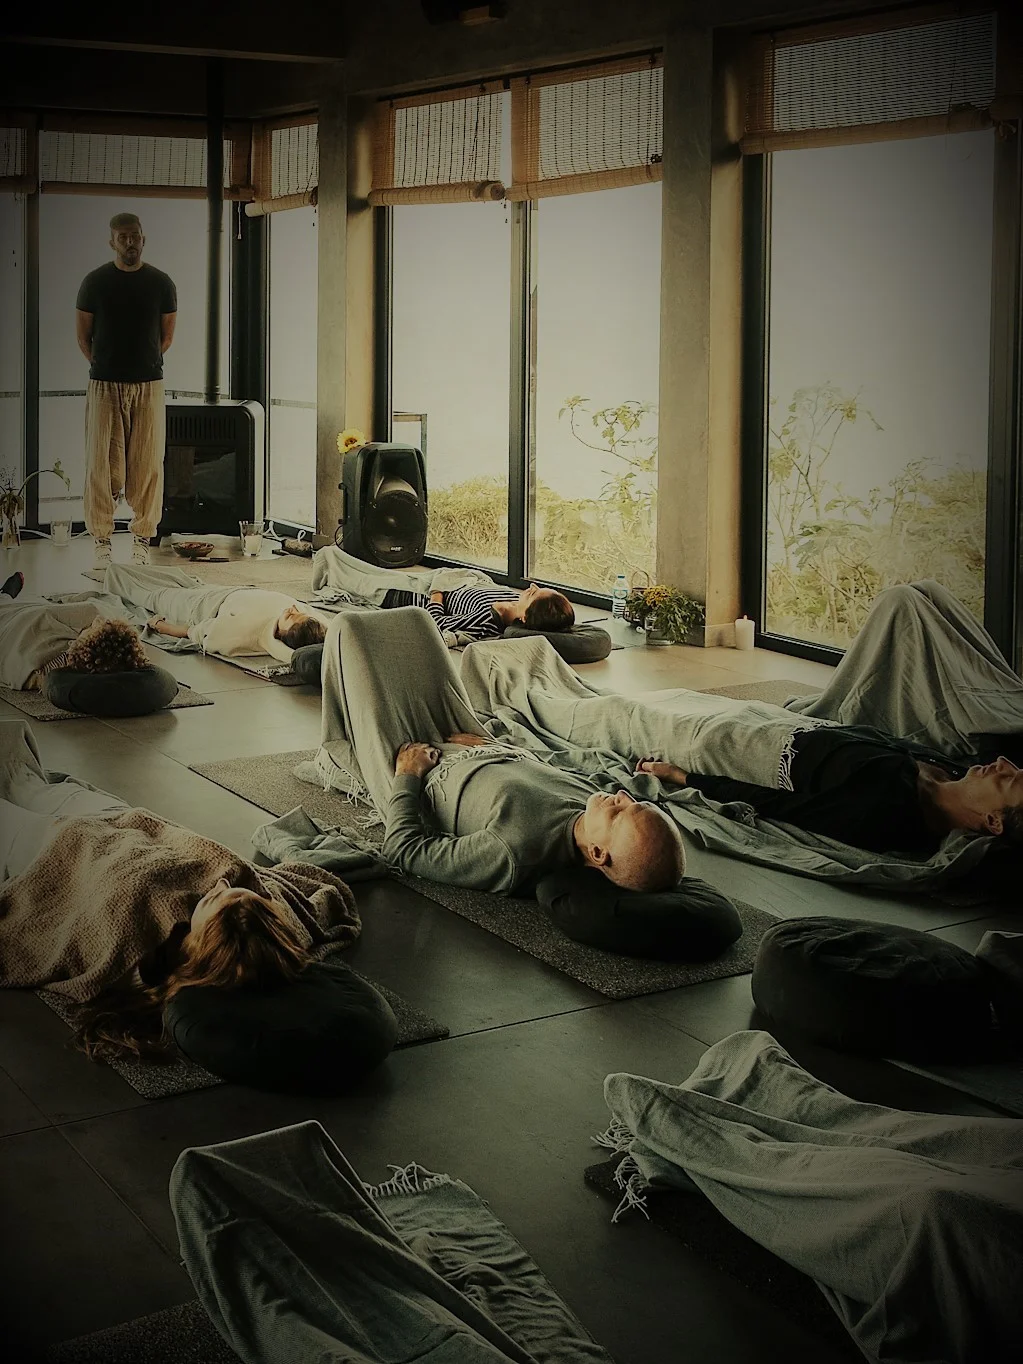 6 day integrative healing yoga retreat in santo amaro, azores, portugal221714127016.webp